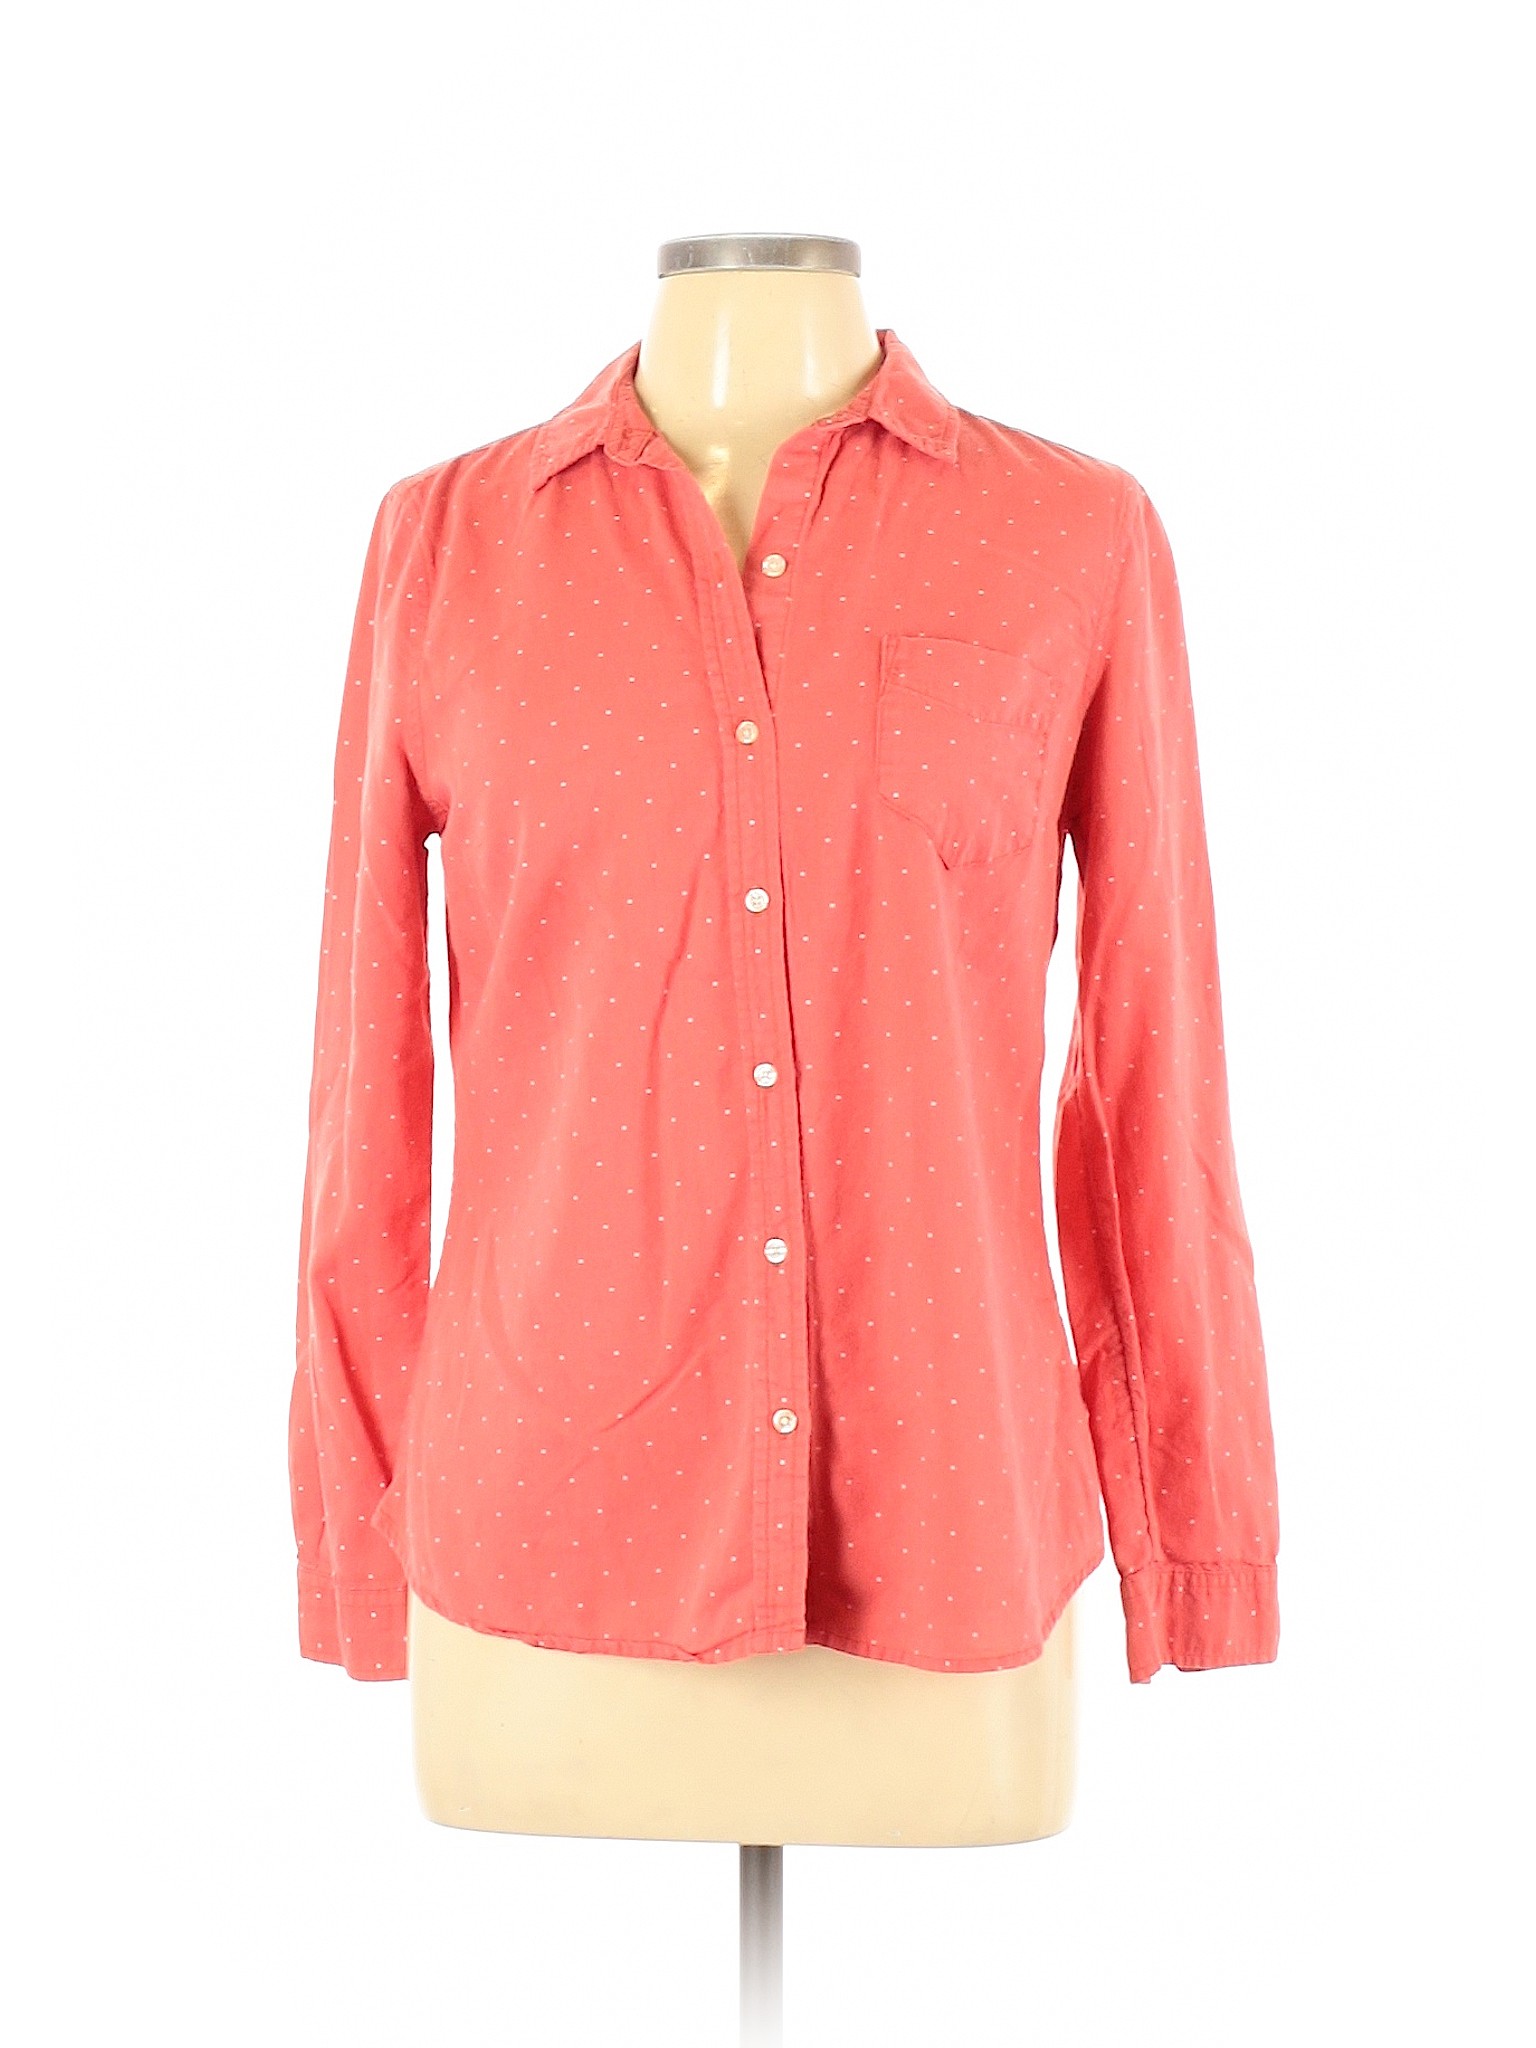 Old Navy Women Pink Long Sleeve Button-Down Shirt M | eBay